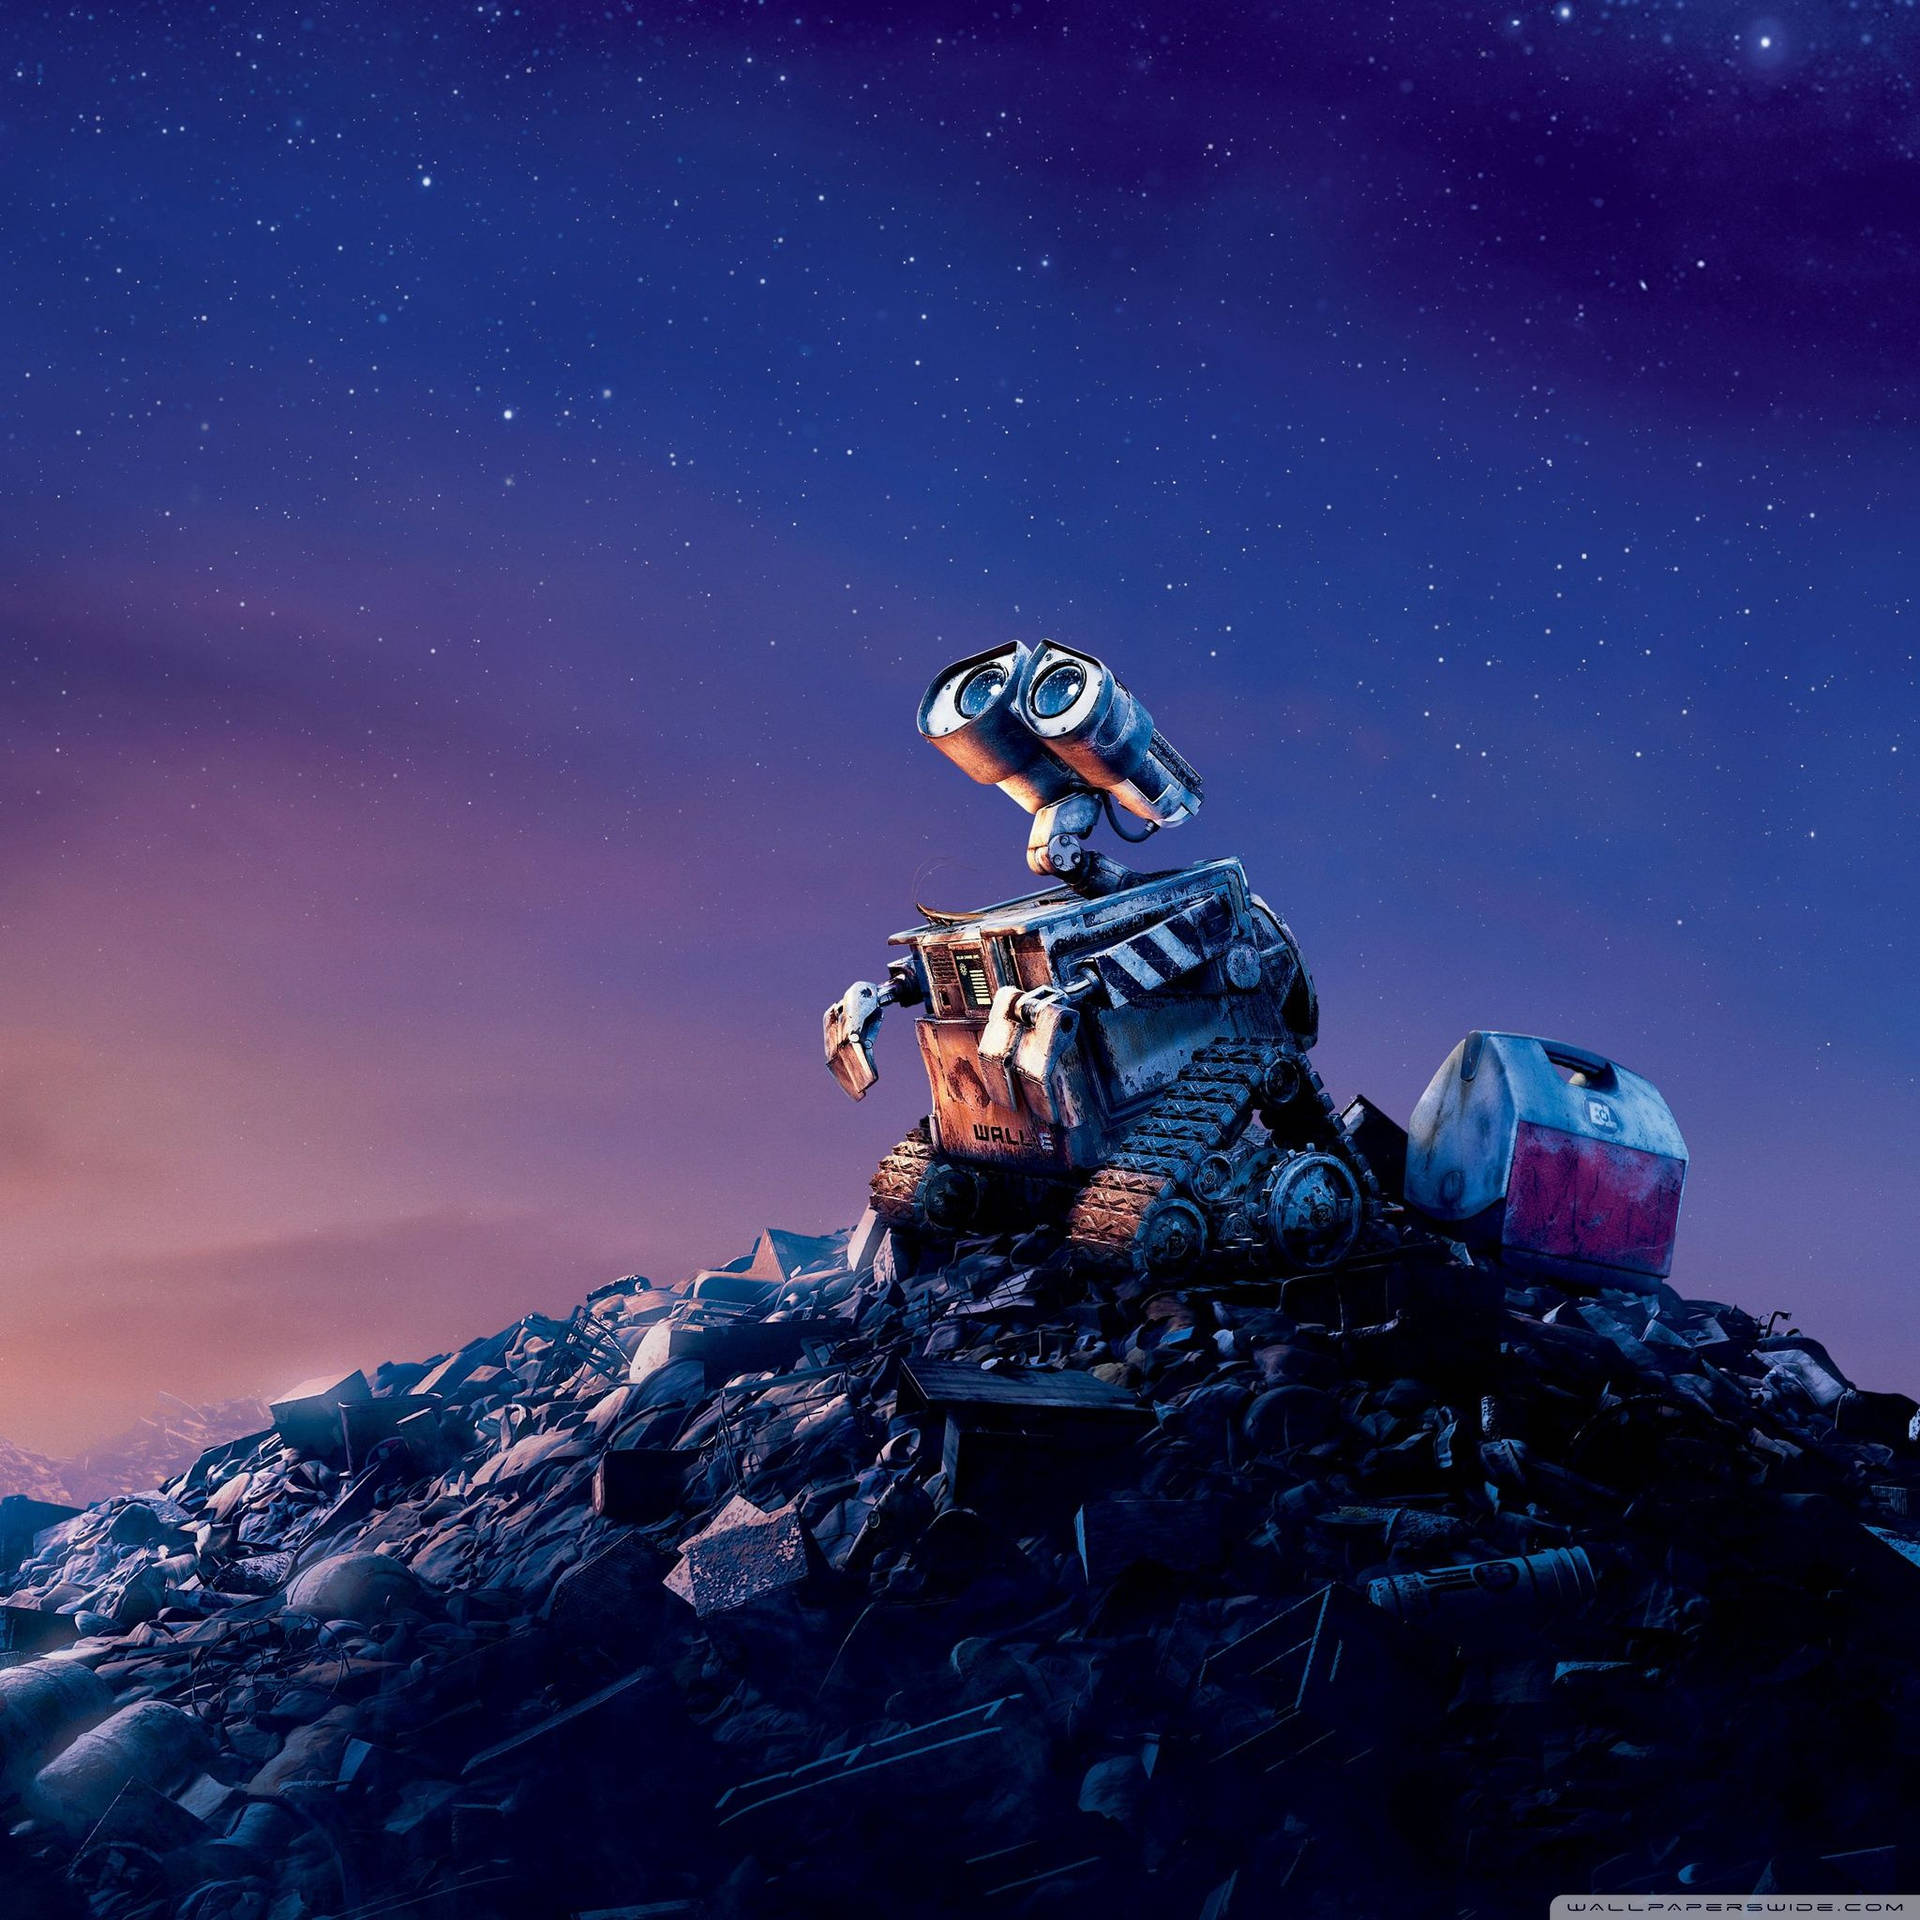 Wall-e Night Sky Ipad Retina Picture